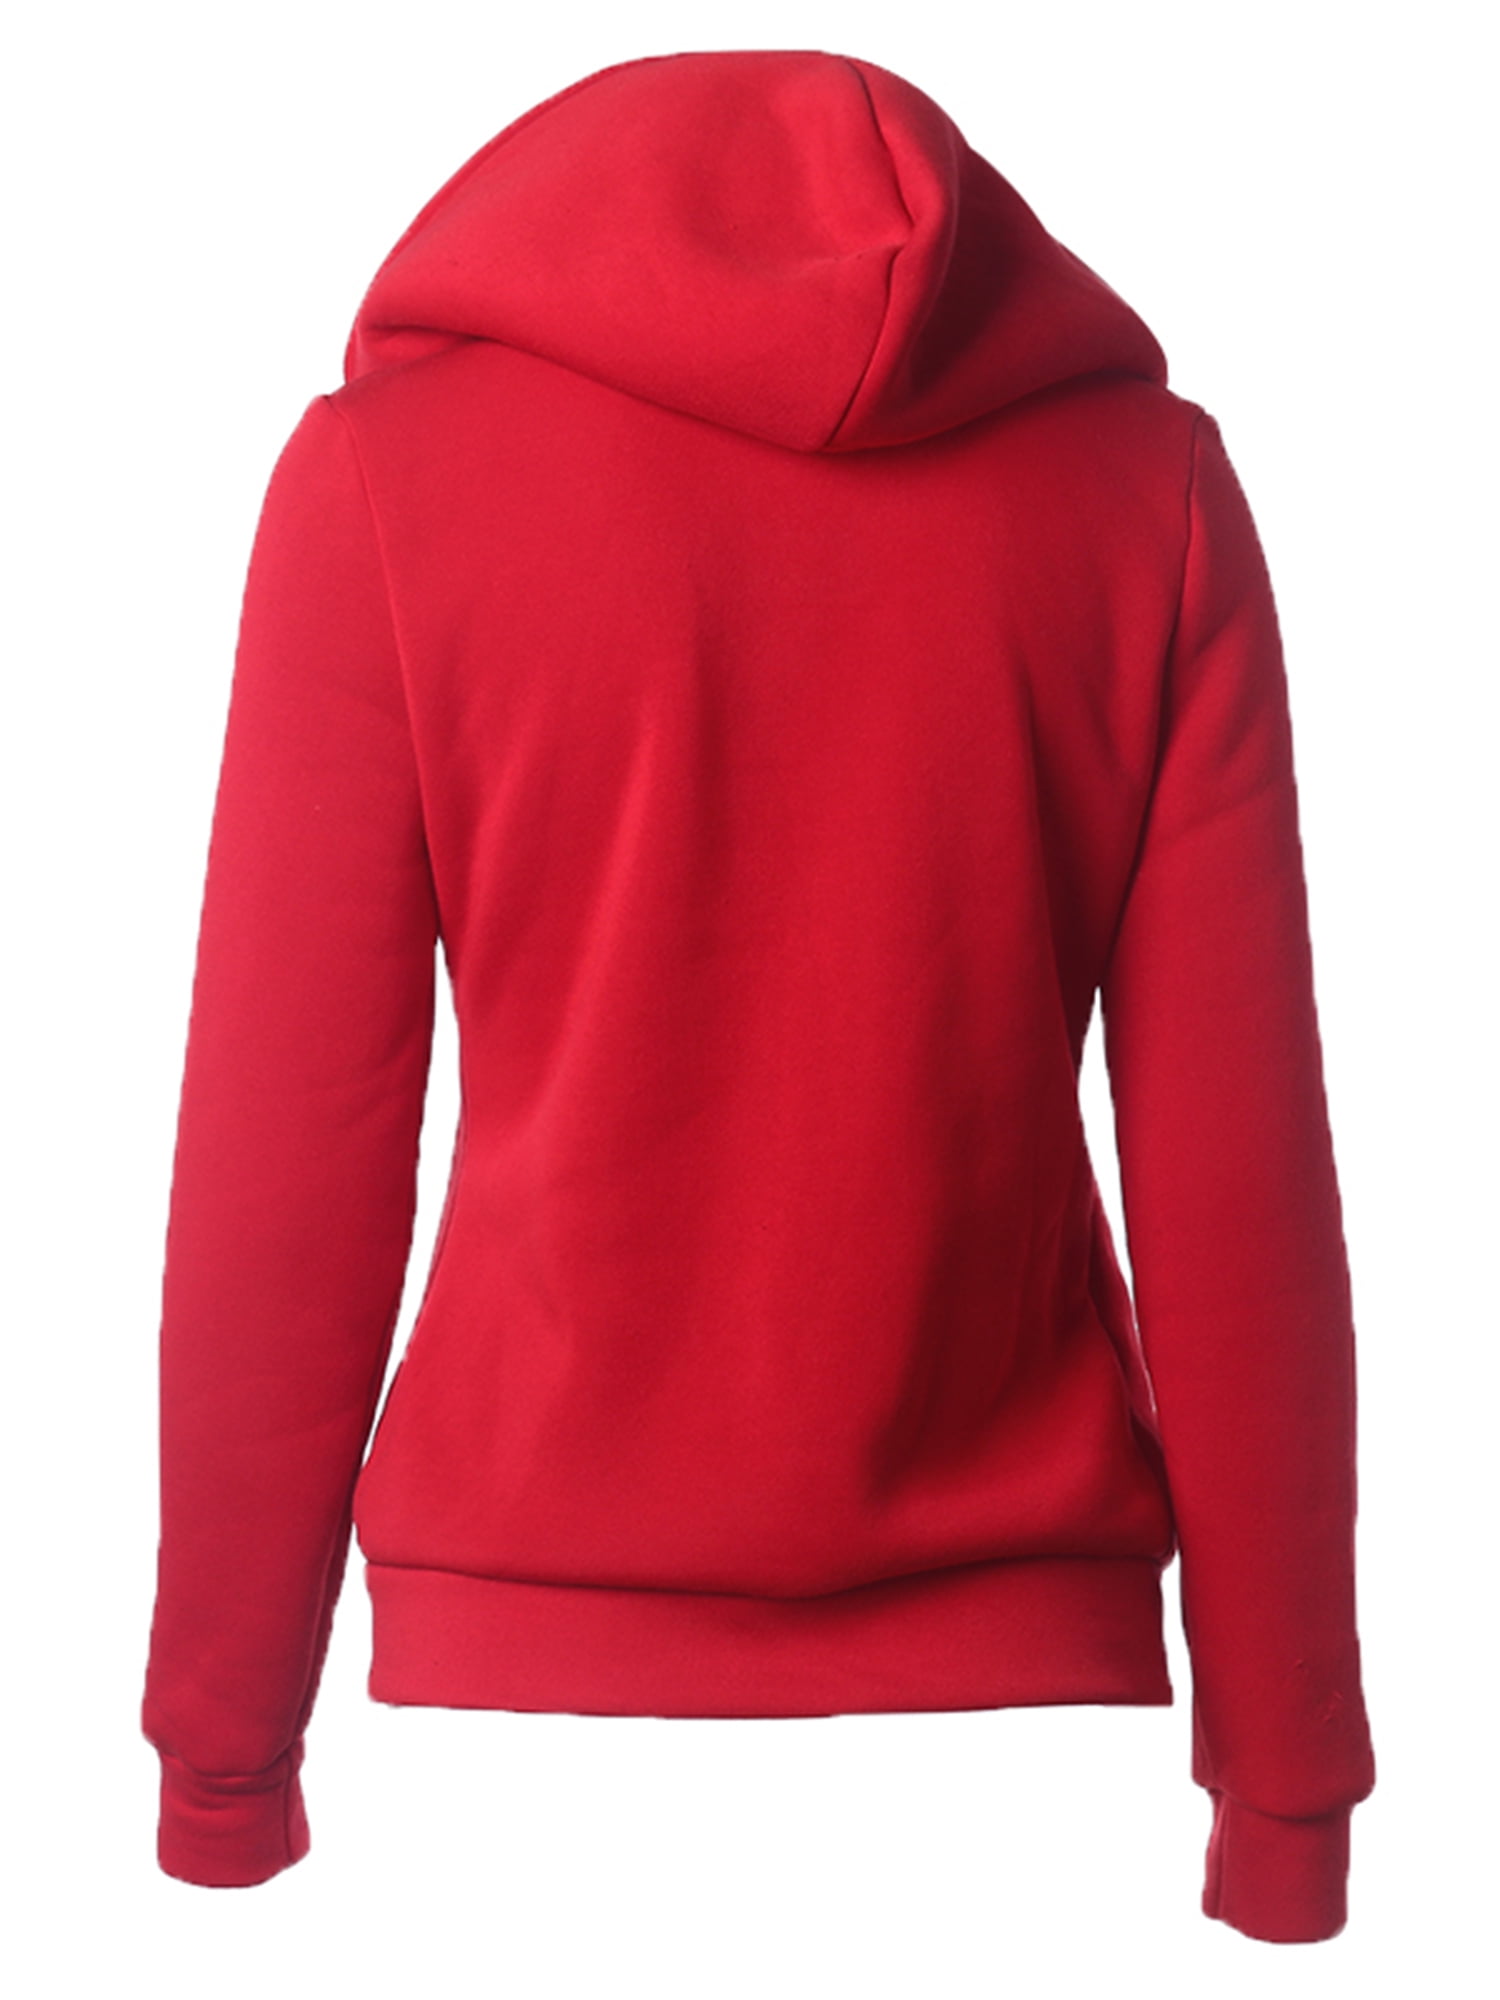 New Women Winter Hooded Hoodie Sweatshirt Zipper Sweater Coat Jacket Jumper Tops